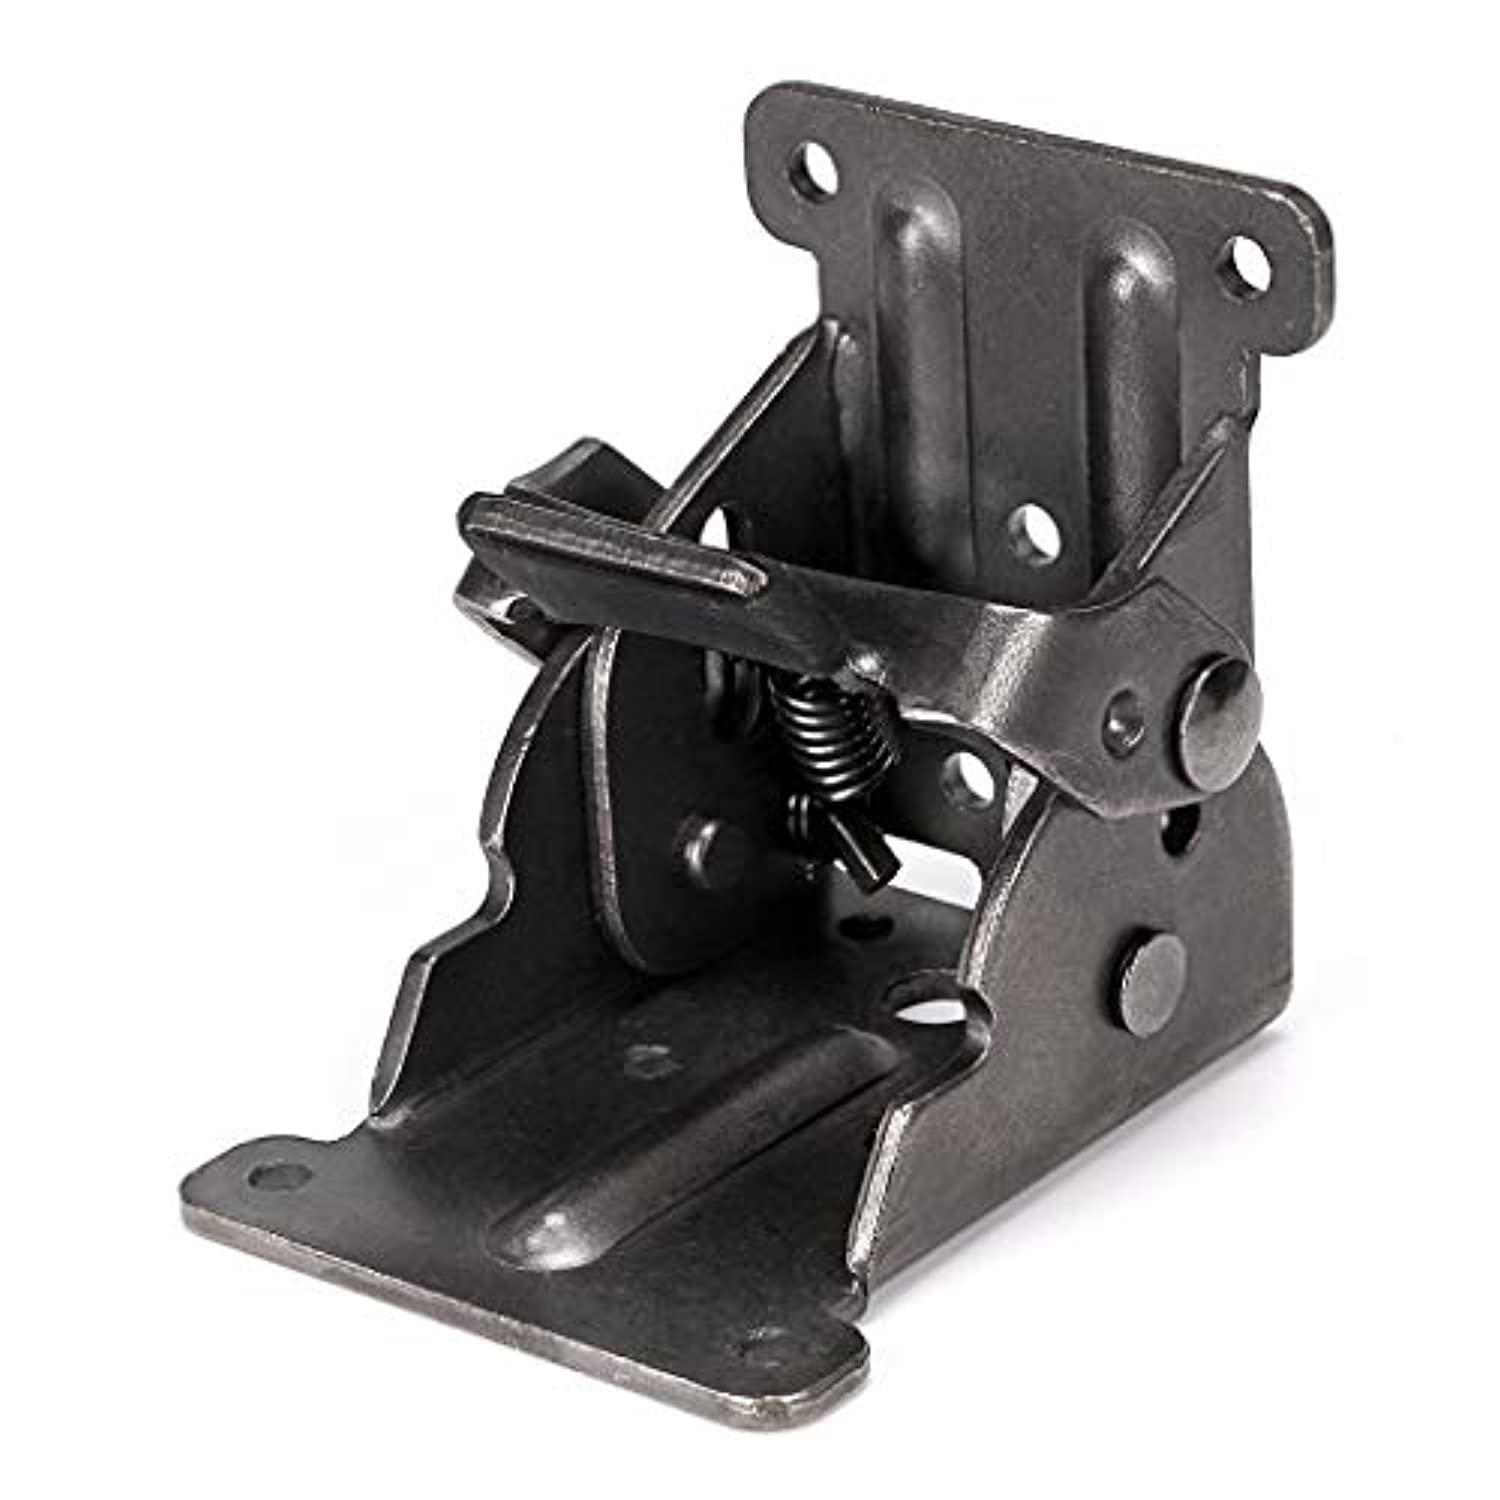 skelang foldable bracket, self-lock hinge hardware with screws lock extension support for table leg, bed leg, workbench, pack